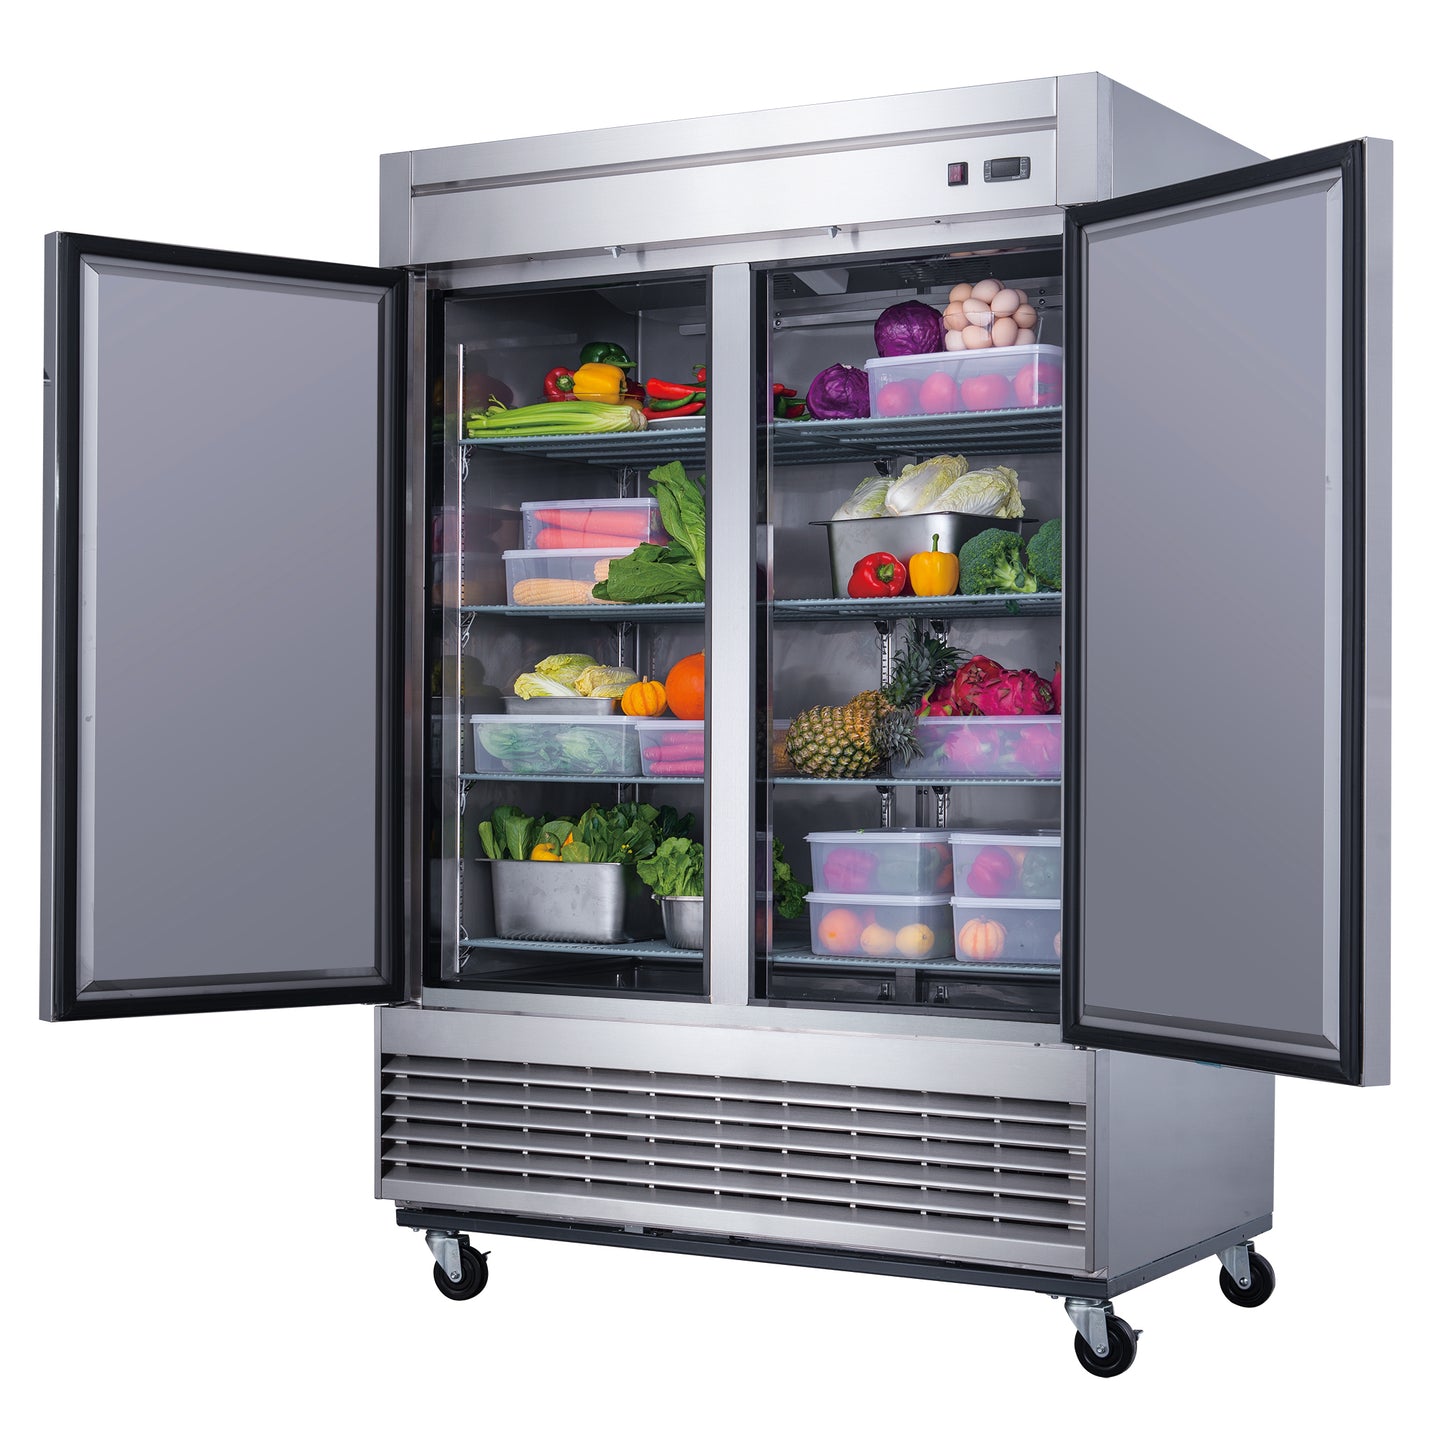 Dukers D55R 40.7 cu. ft. 2-Door Commercial Refrigerator